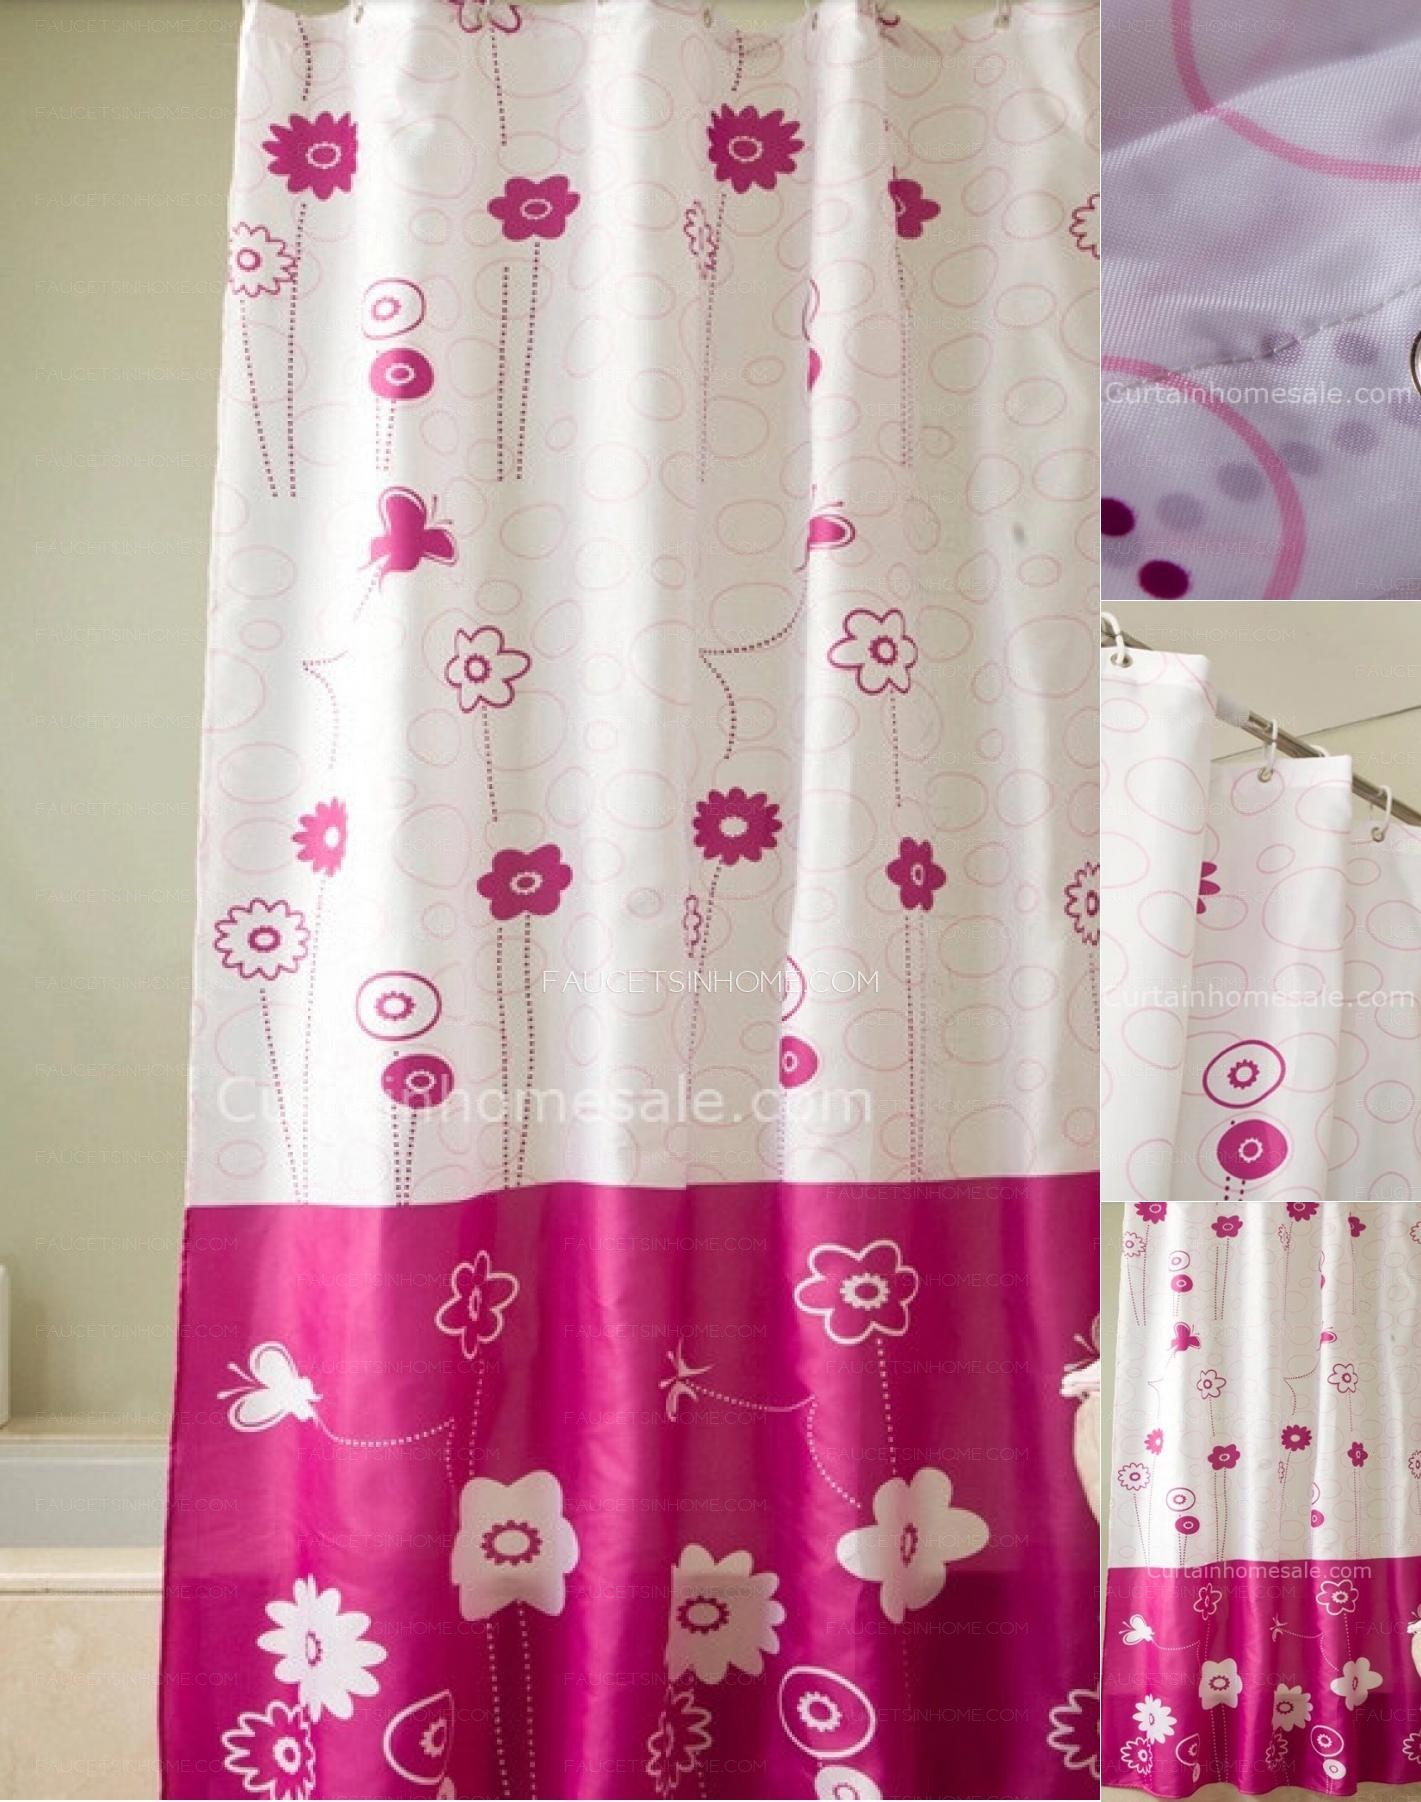 Funky Kids Shower Curtain And Waterproof Floral Print Purple